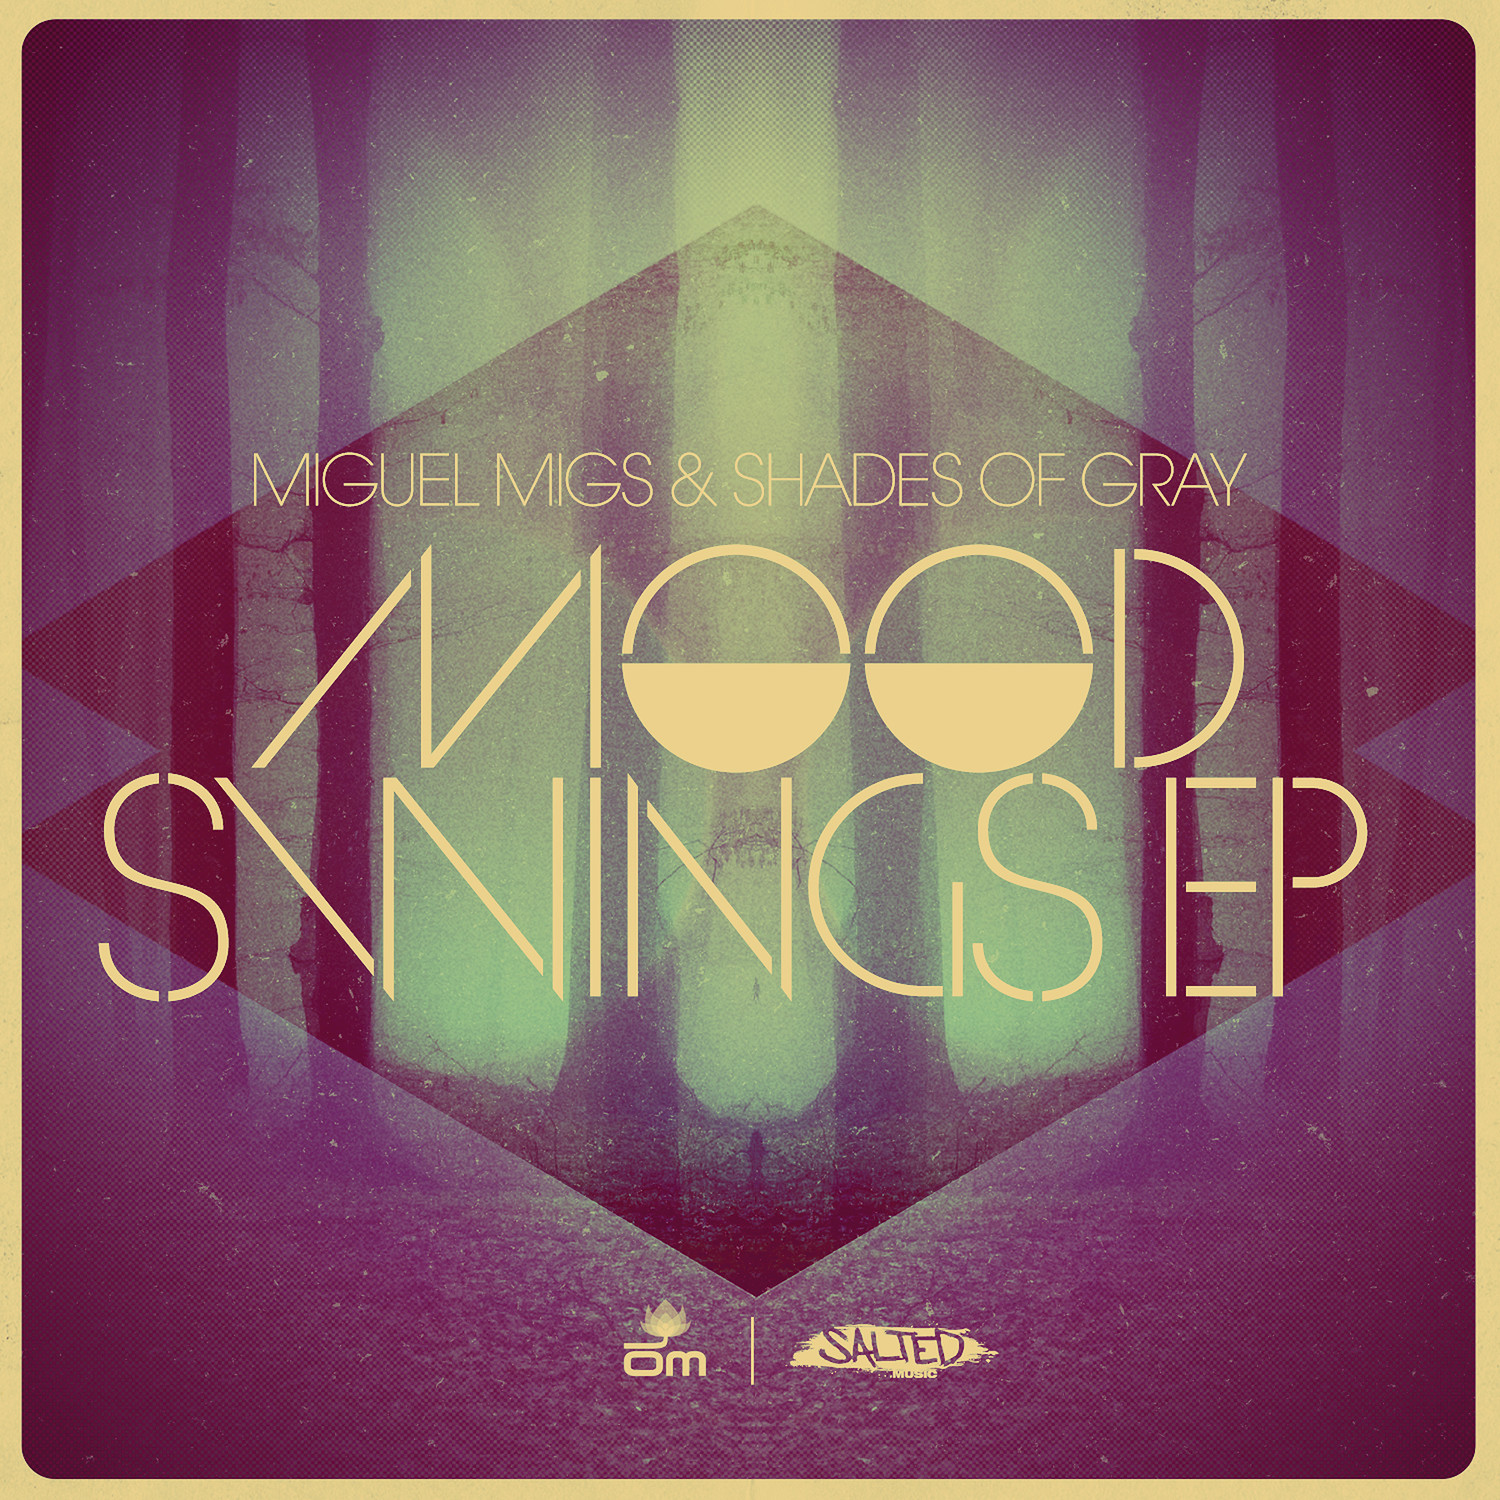 Mood Swings EP